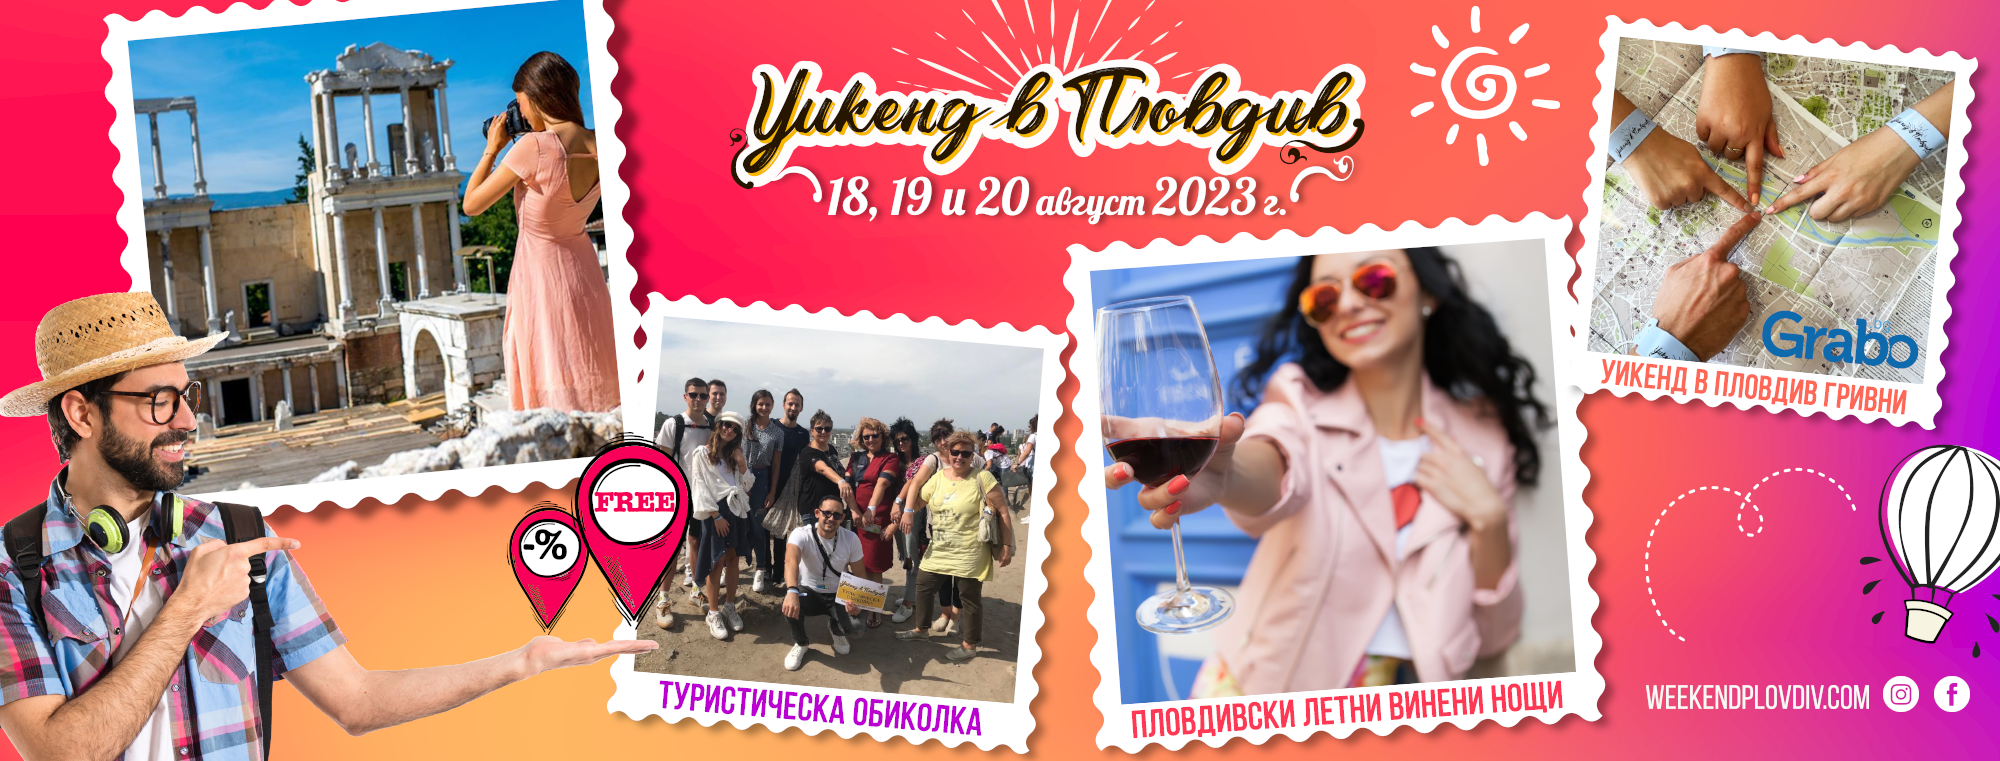 Уикенд в Пловдив 2022 29,30,31 юли